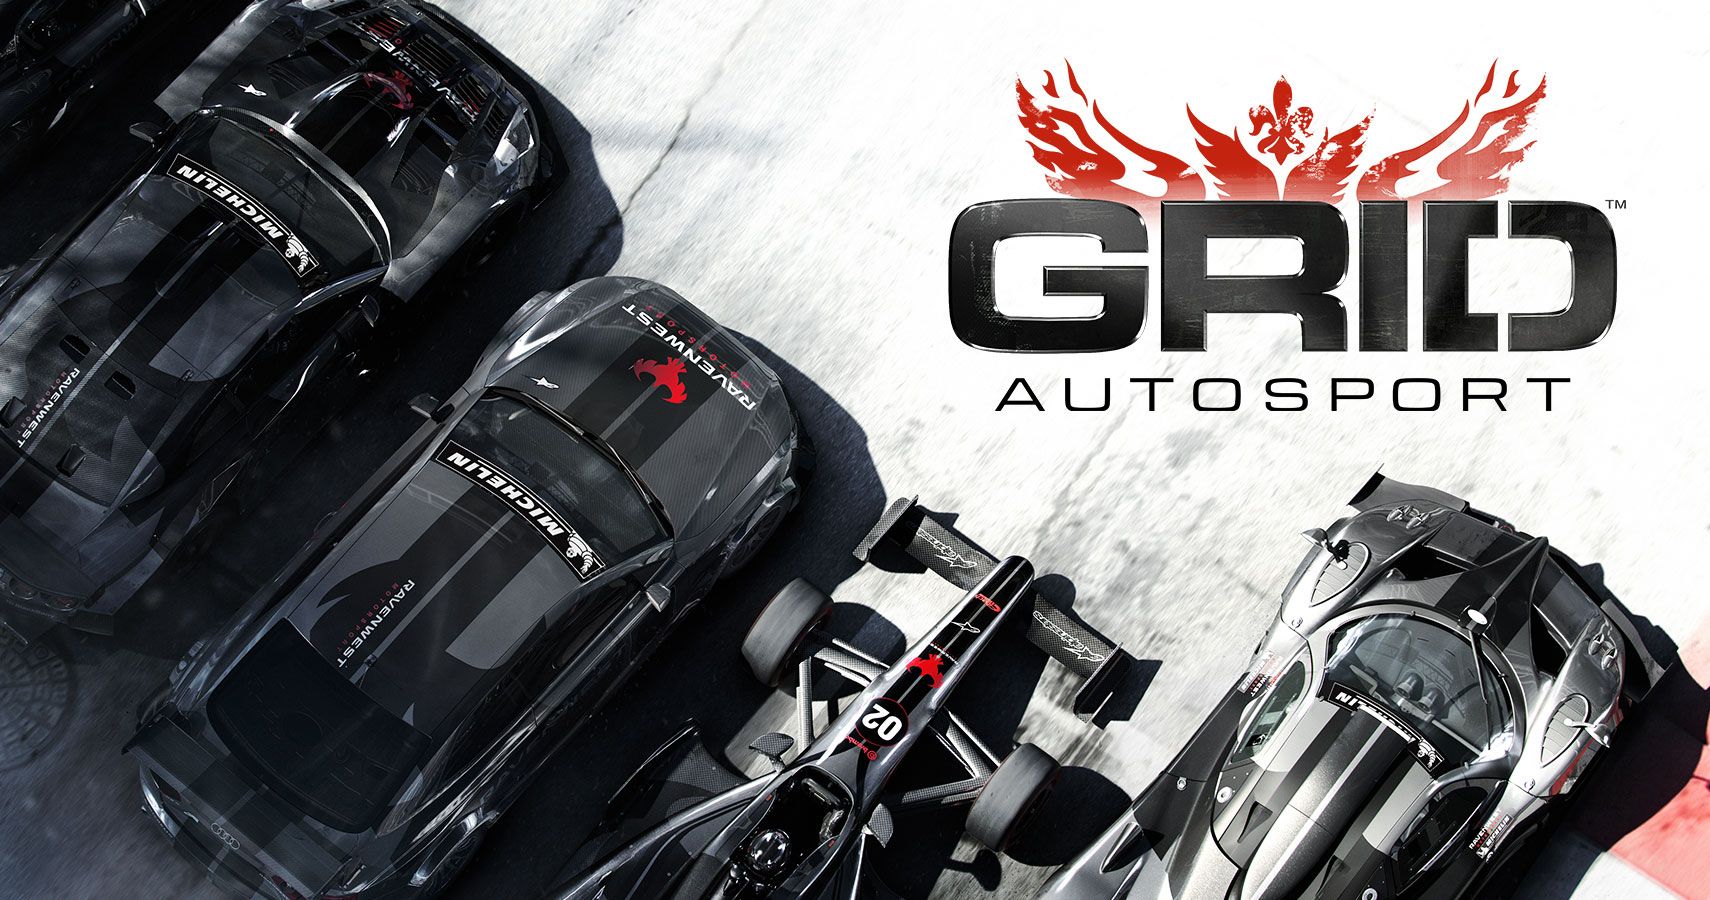 GRID Autosport Review